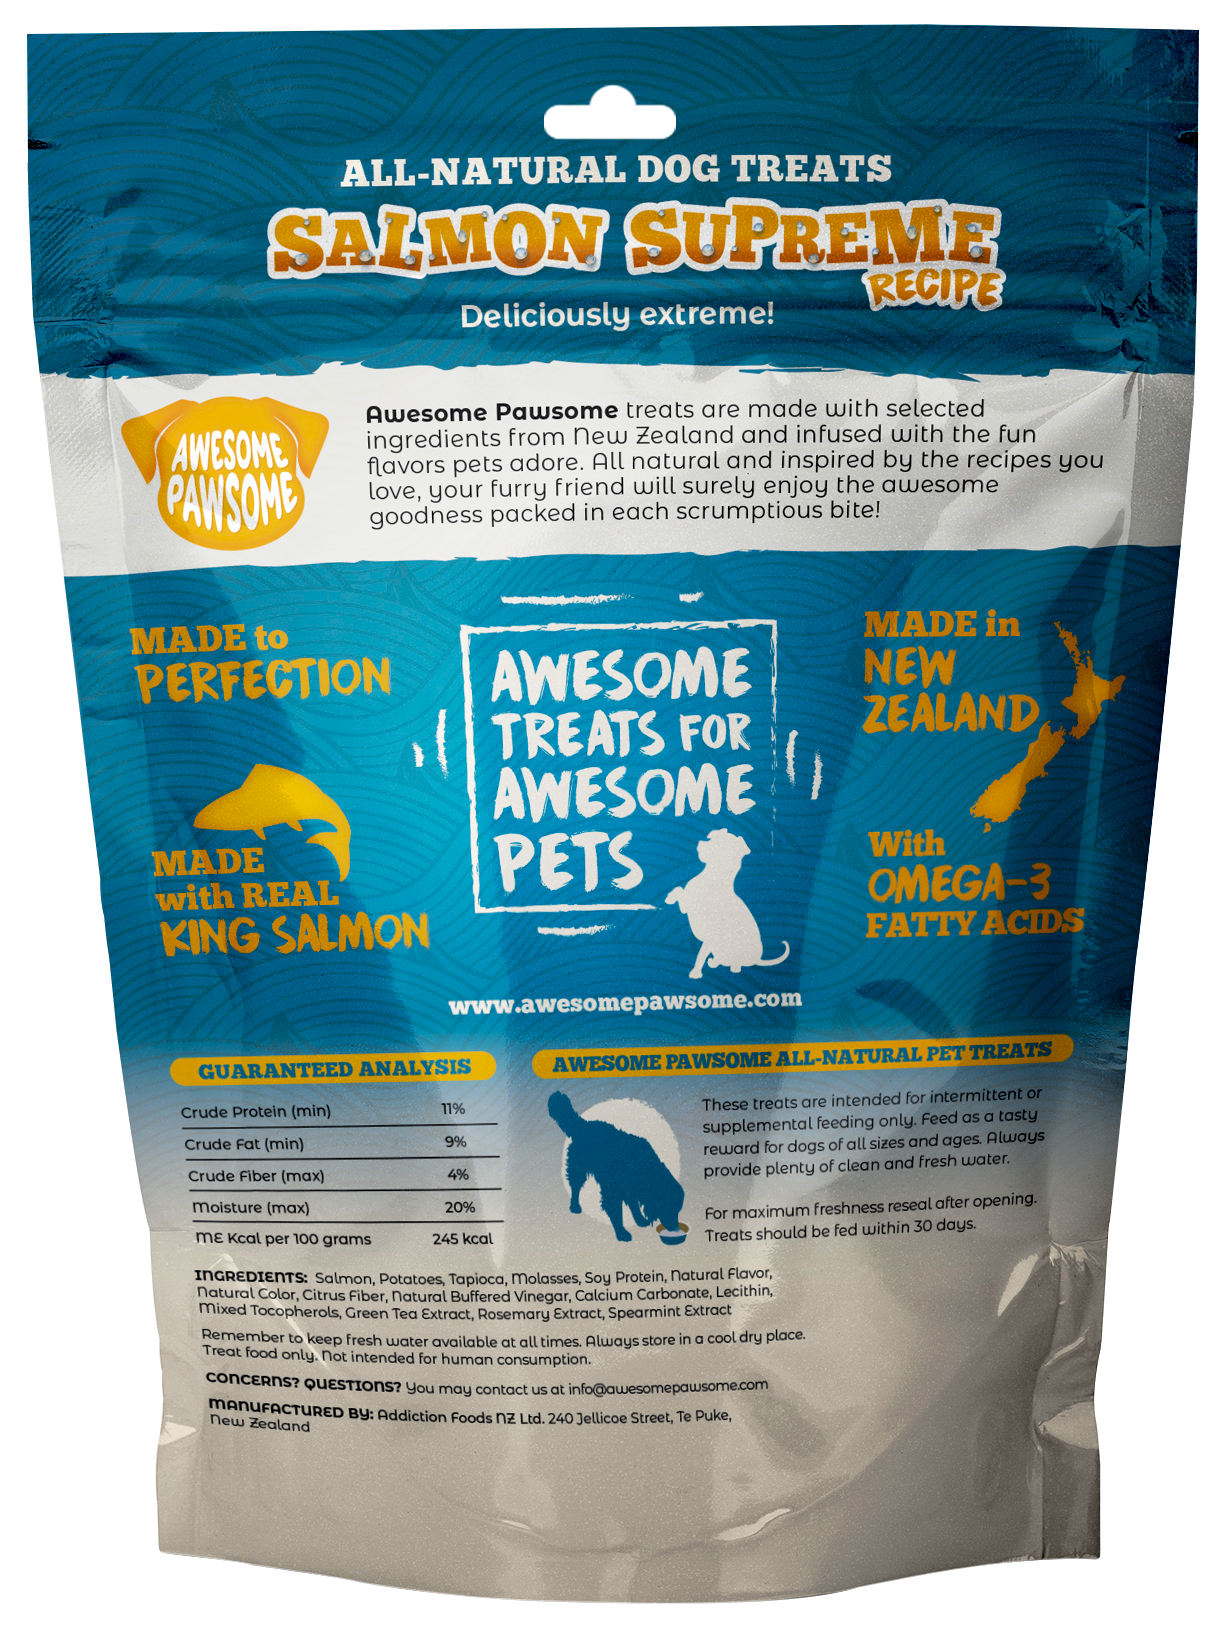 Awesome Pawsome Salmon Supreme